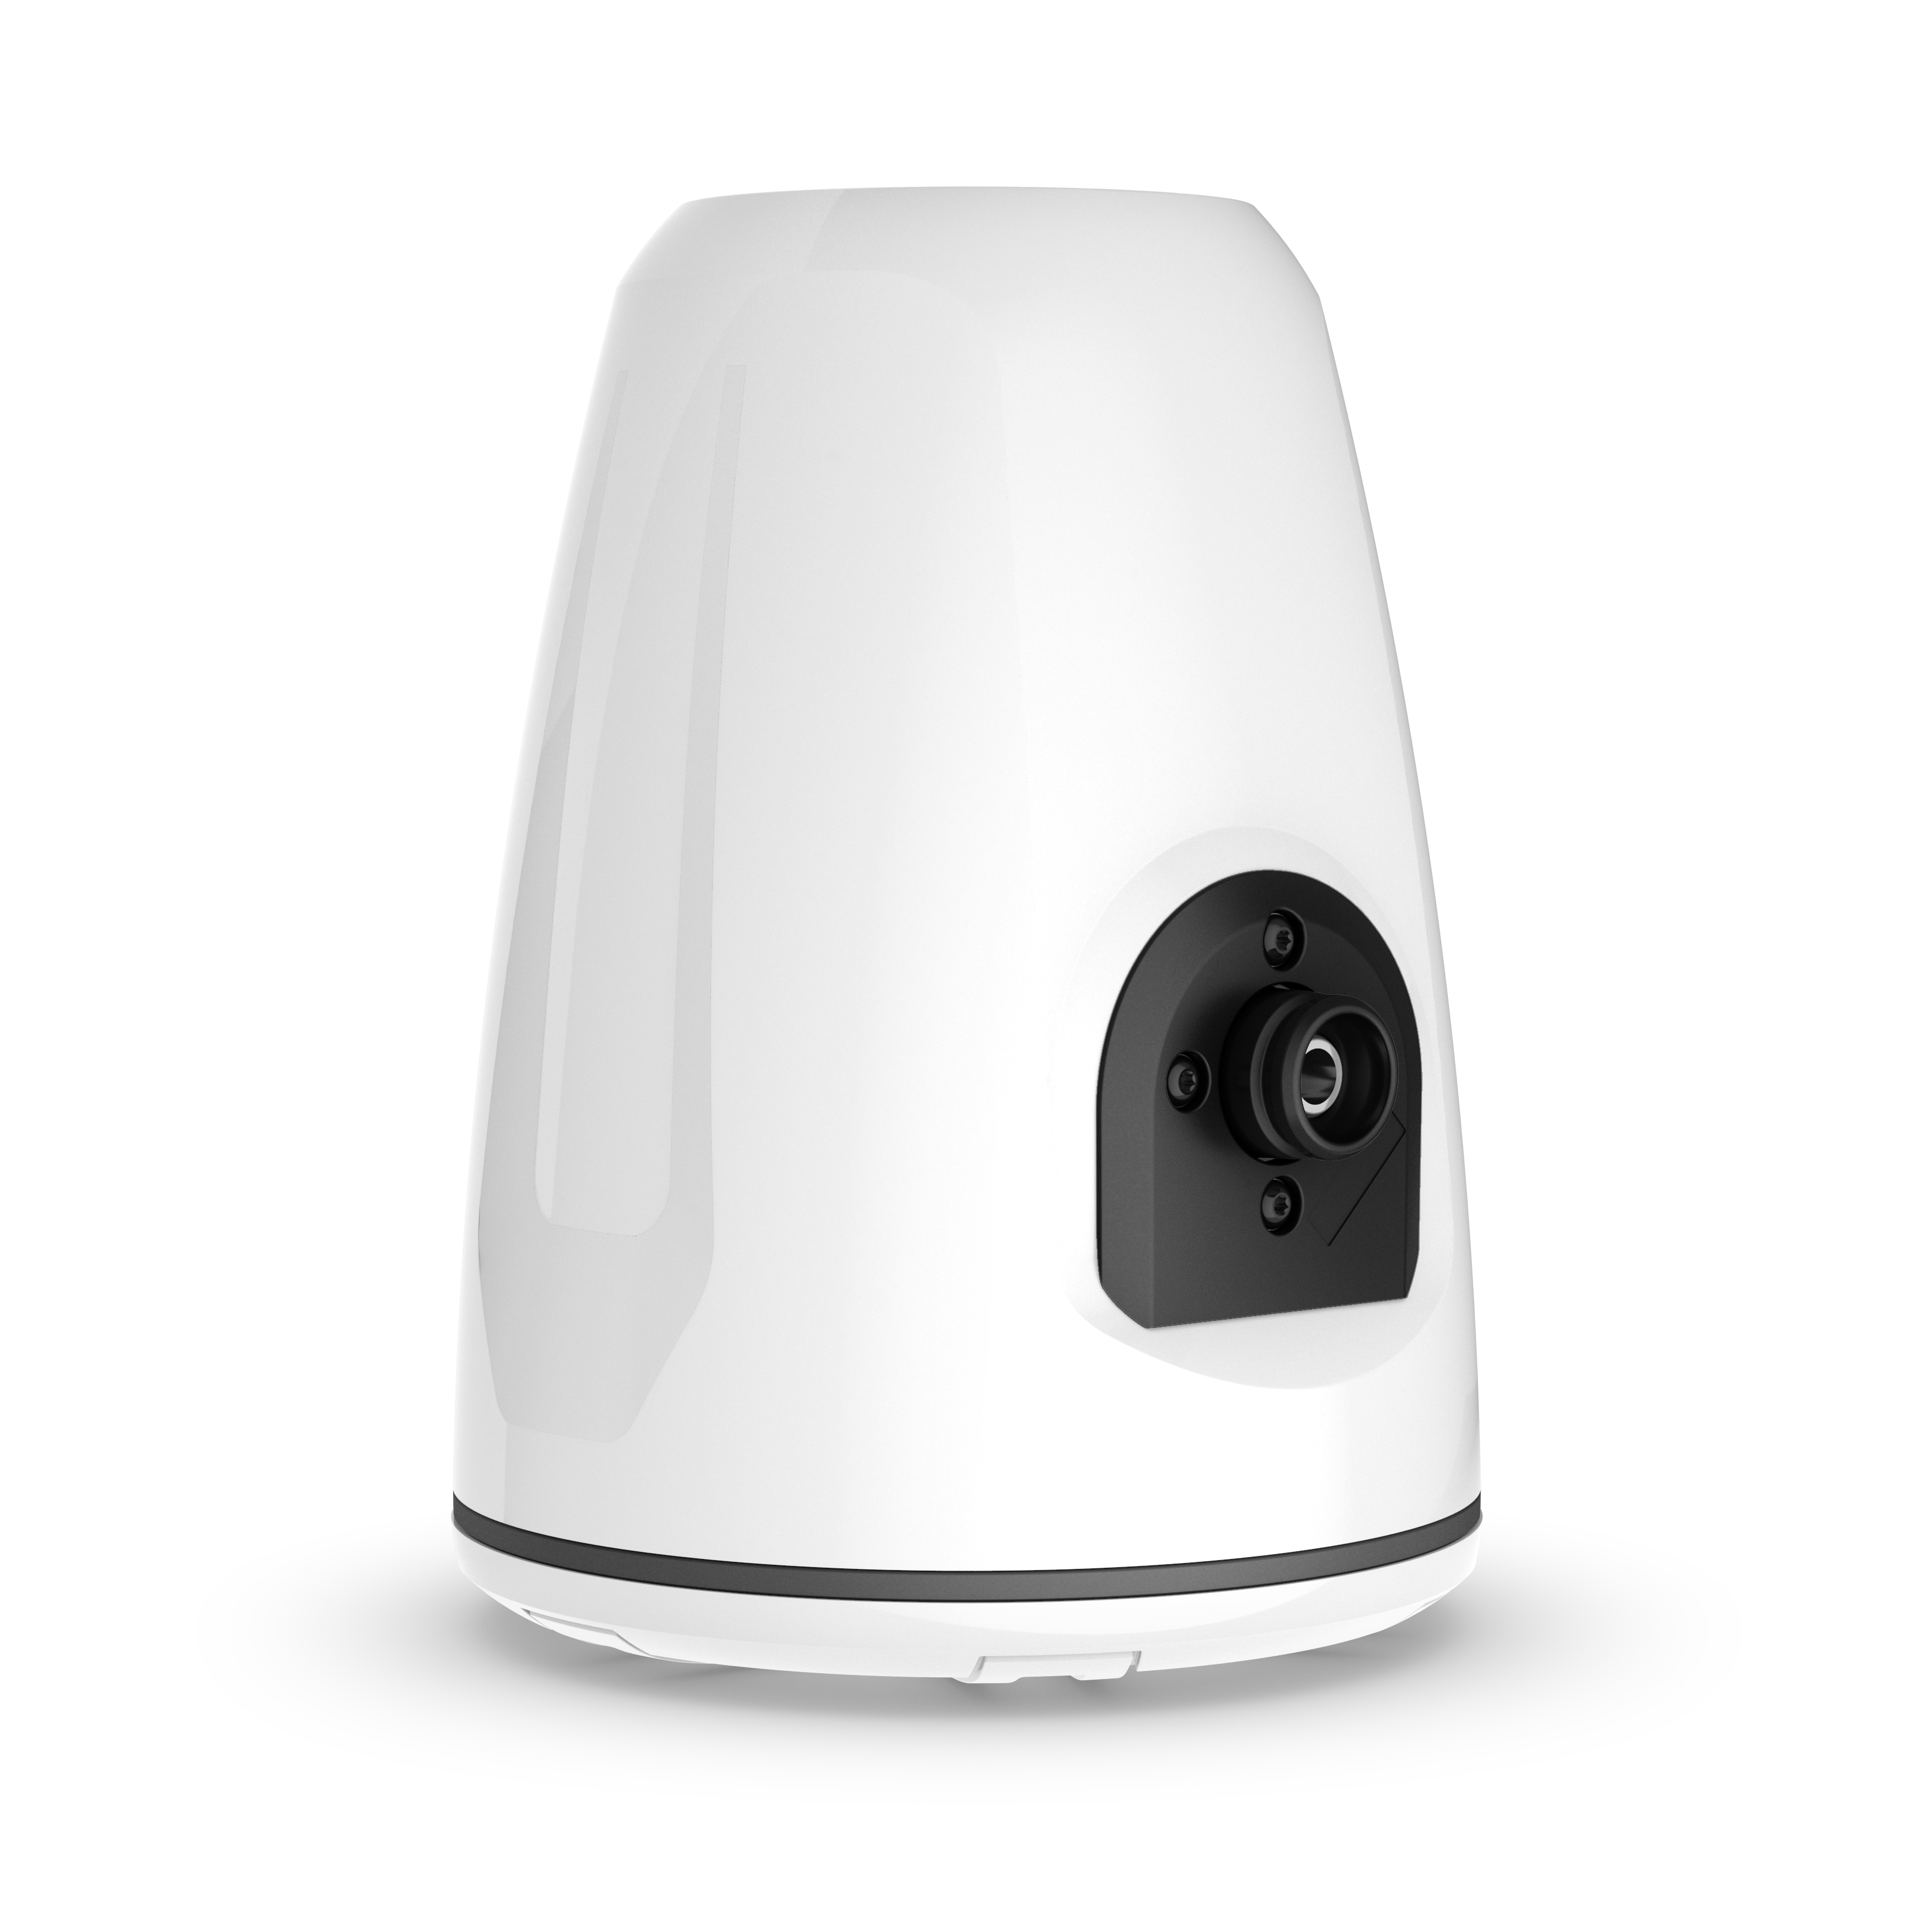 Garmin Fusion® XS Series Wake Tower Marine Speakers, 6.5" 200 Watt Sports White wake tower marine speakers with RGB LED lighting 